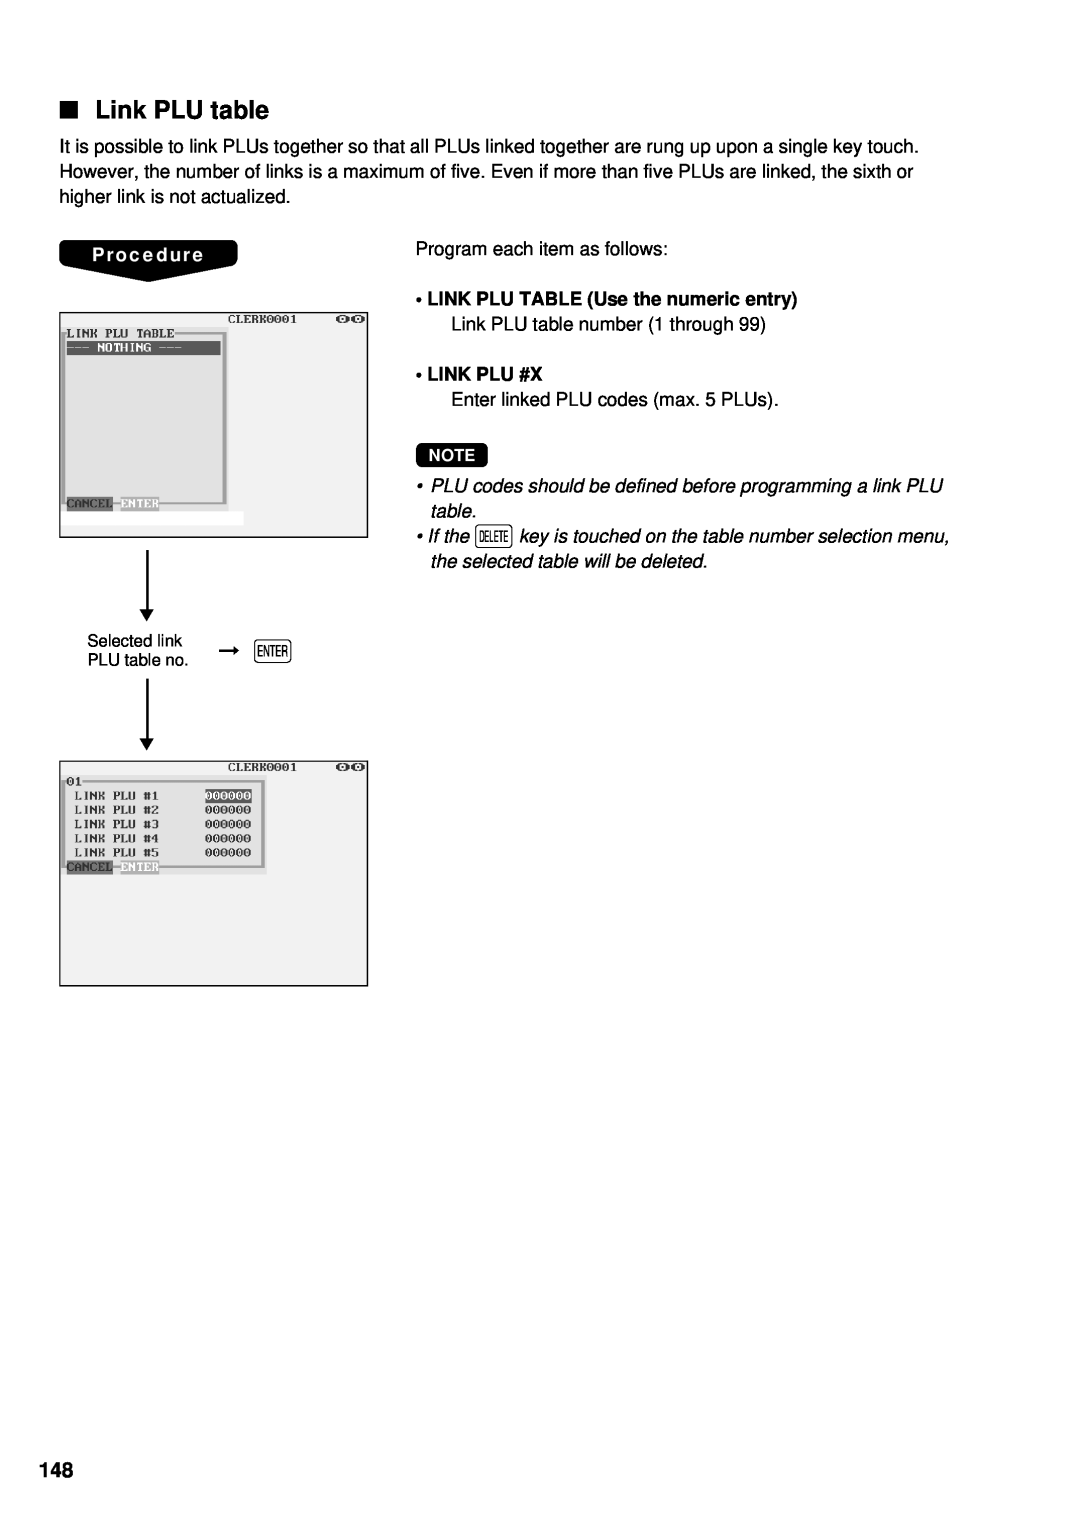 Sharp UP-3300 instruction manual Link PLU table, •Link Plu #X, Procedure 